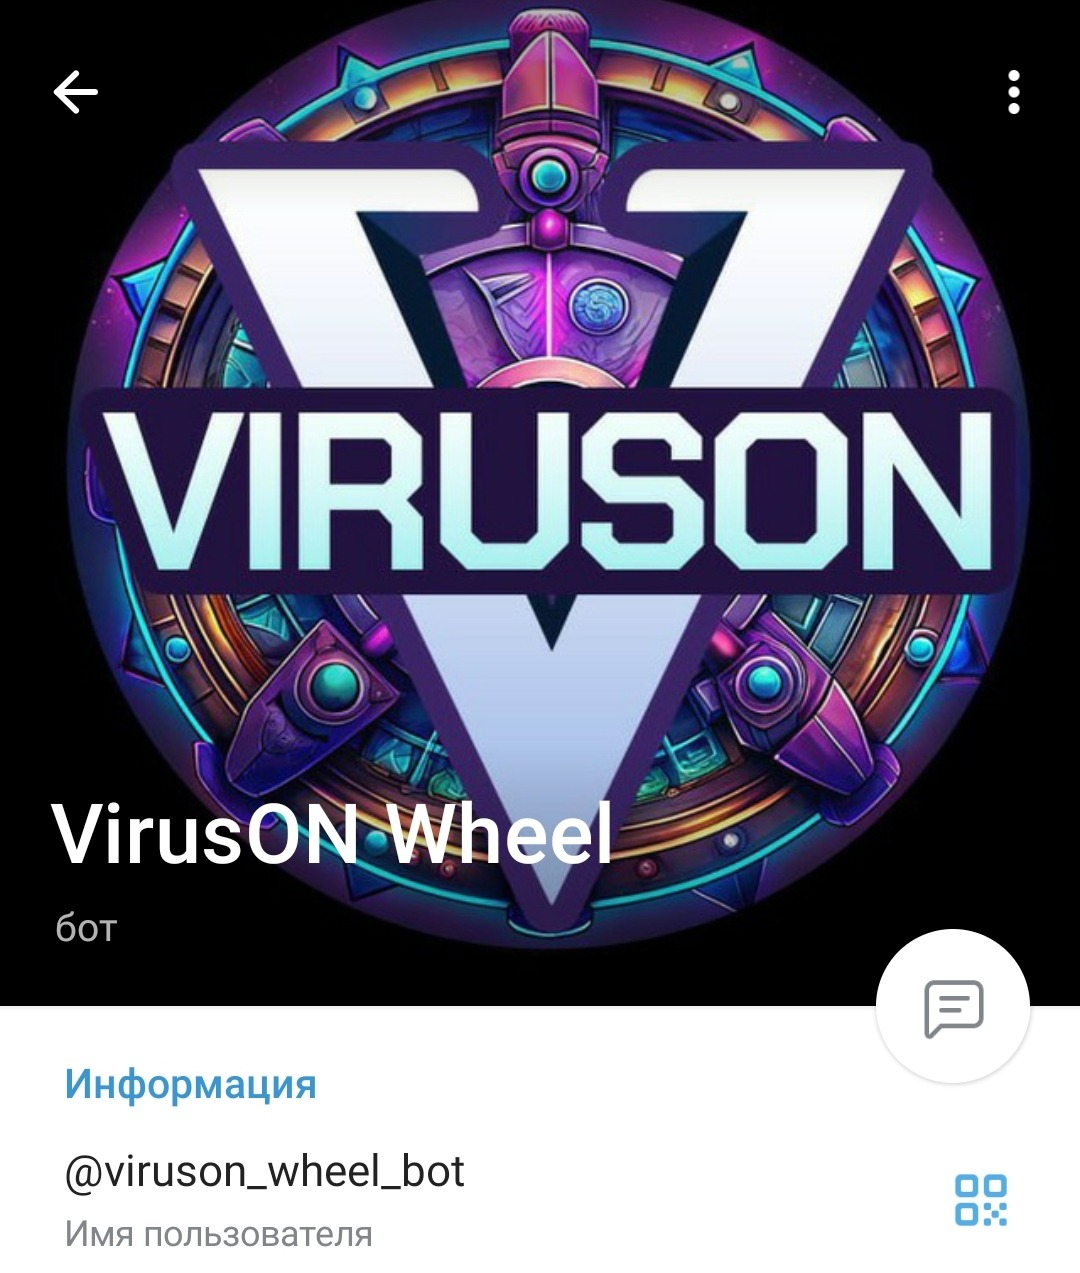 Viruson Wheel Bot